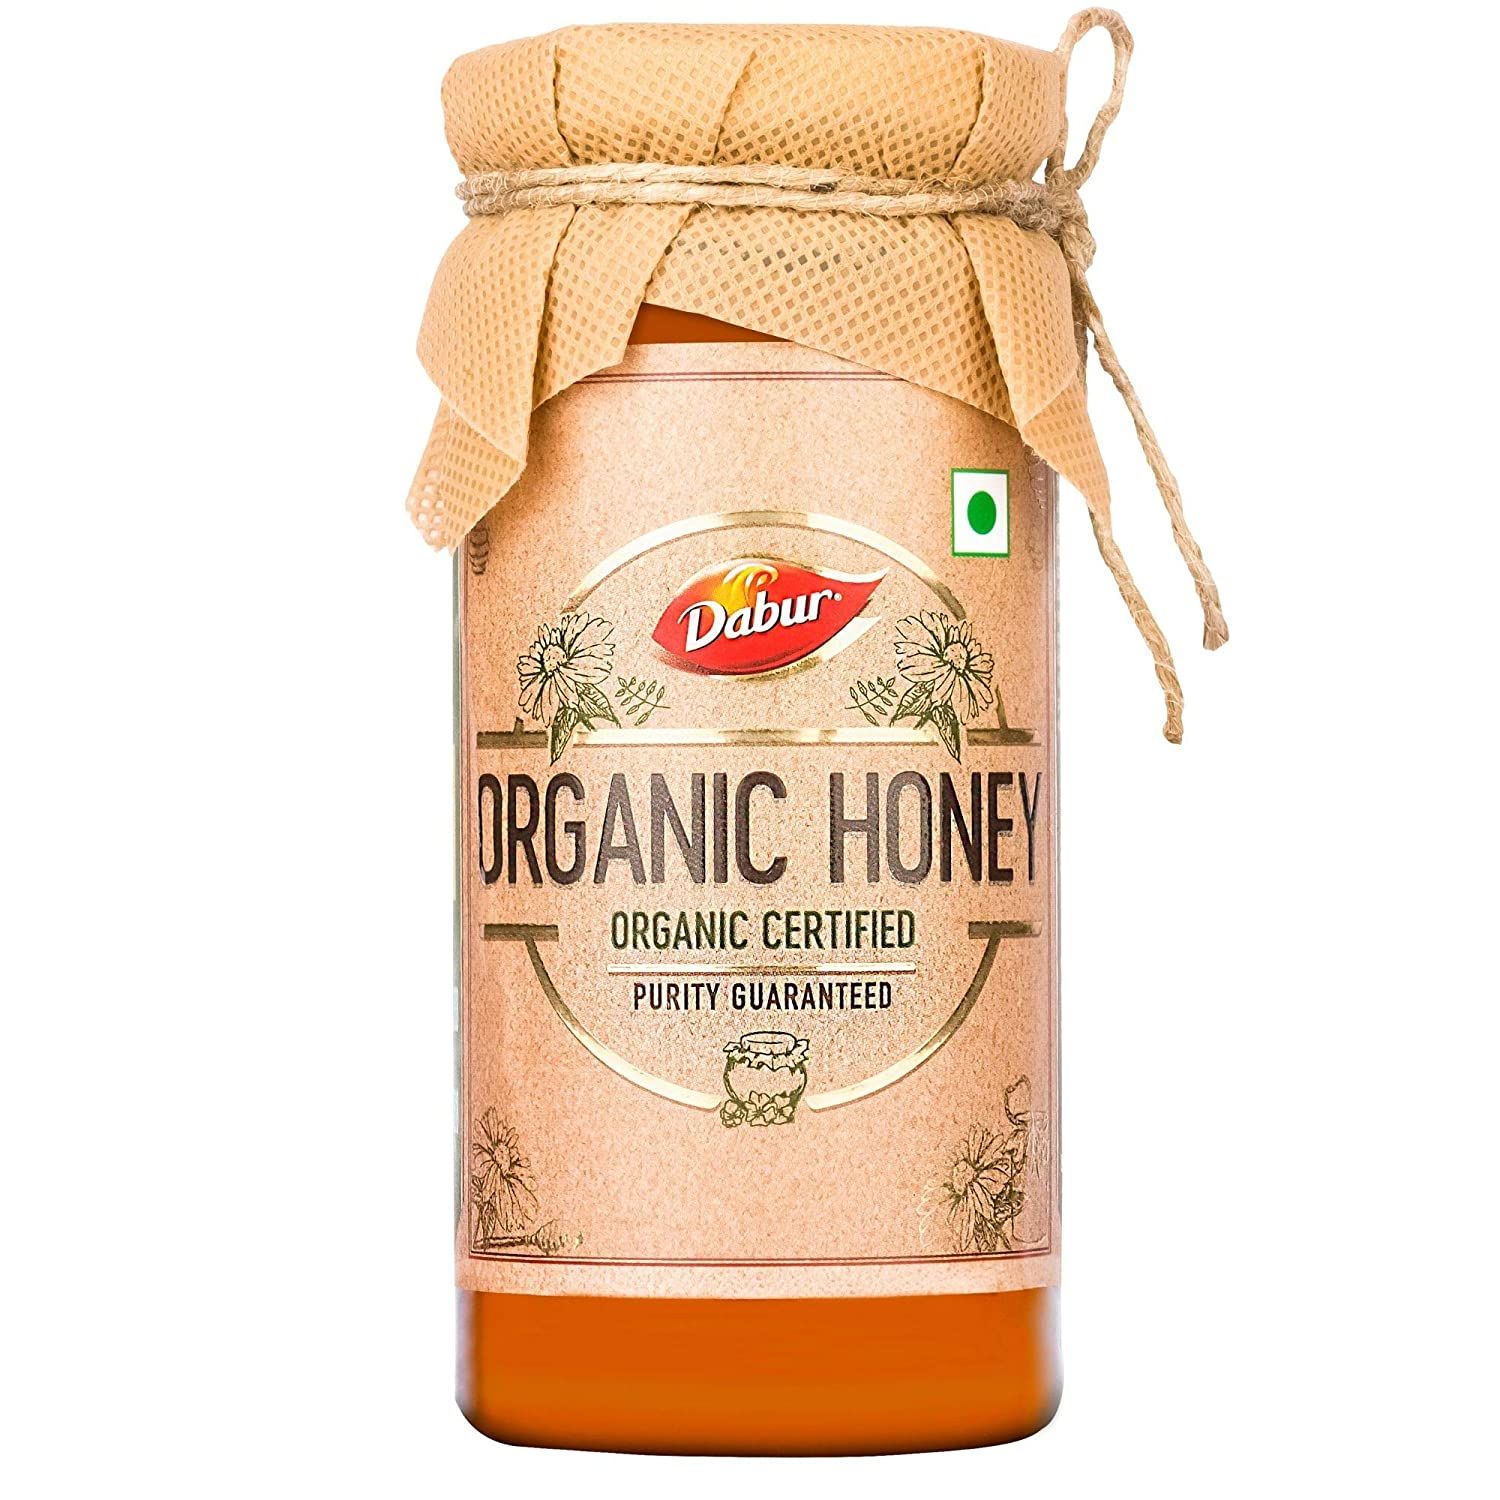 Dabur Organic Honey Image